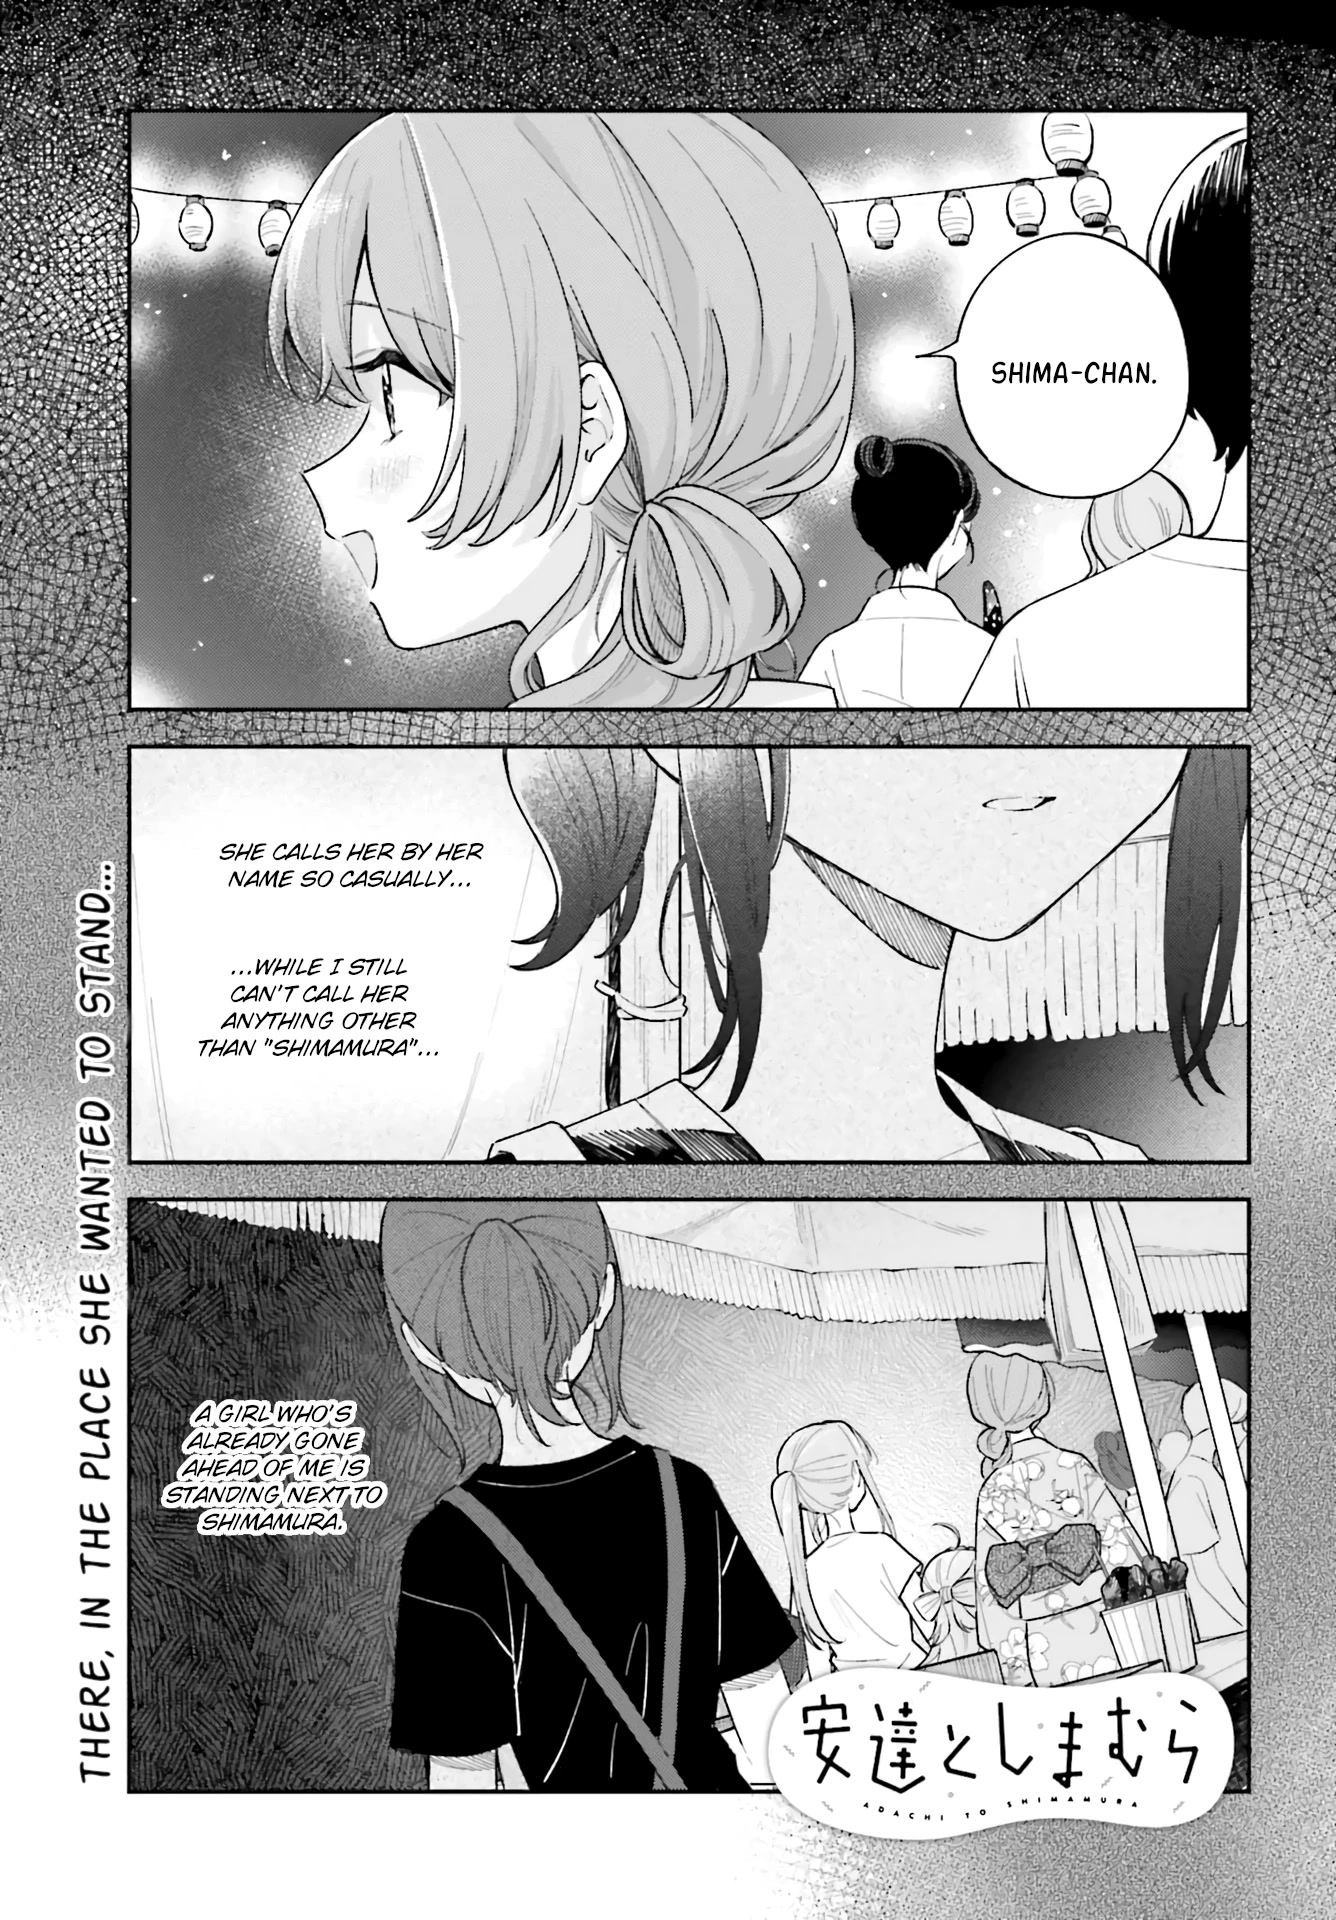 Adachi To Shimamura (Moke Yuzuhara) - Page 1